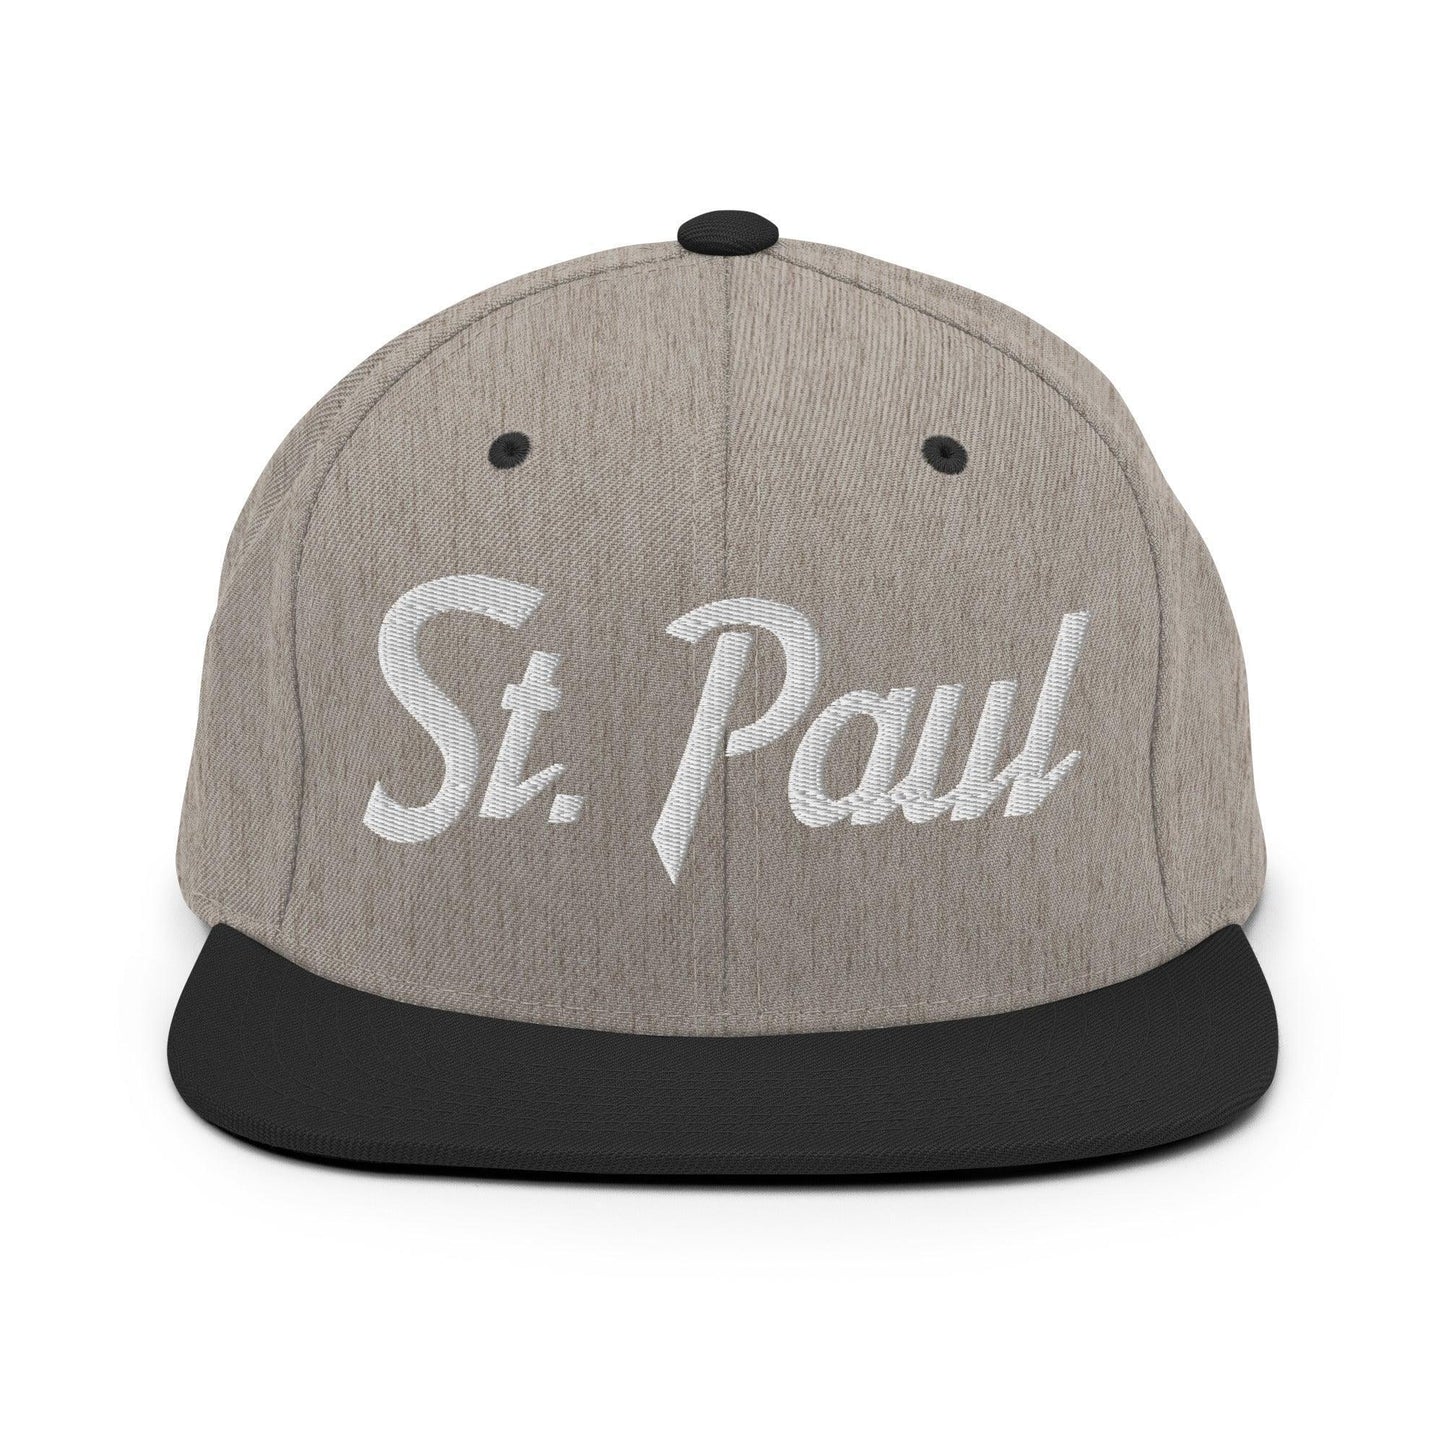 St. Paul Script Snapback Hat Heather/Black